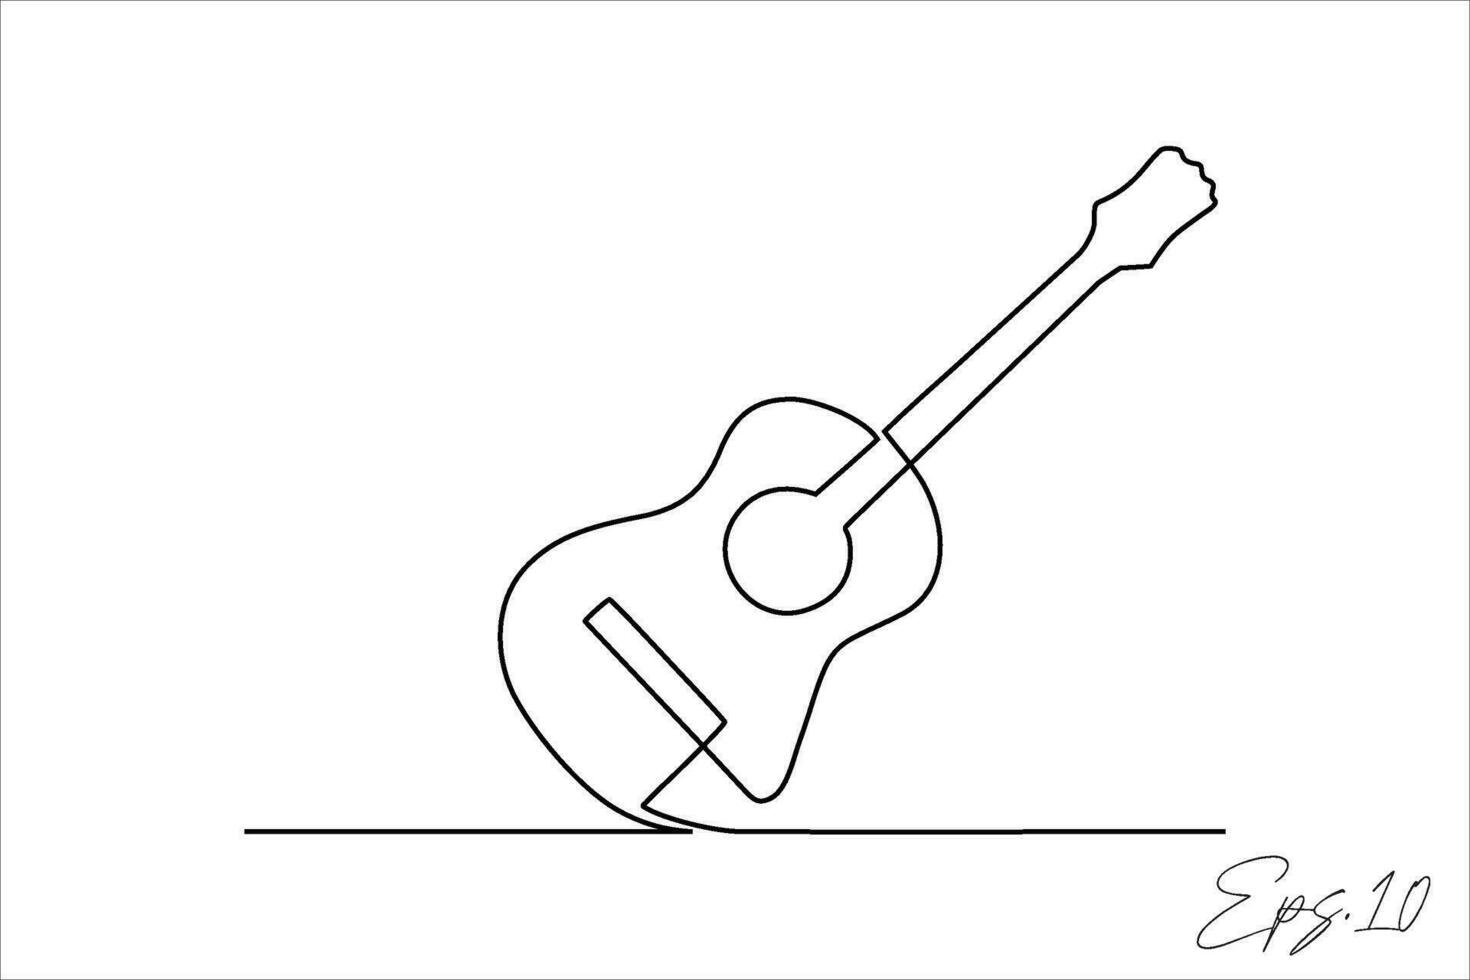 acústico guitarra continuo línea Arte dibujo vector